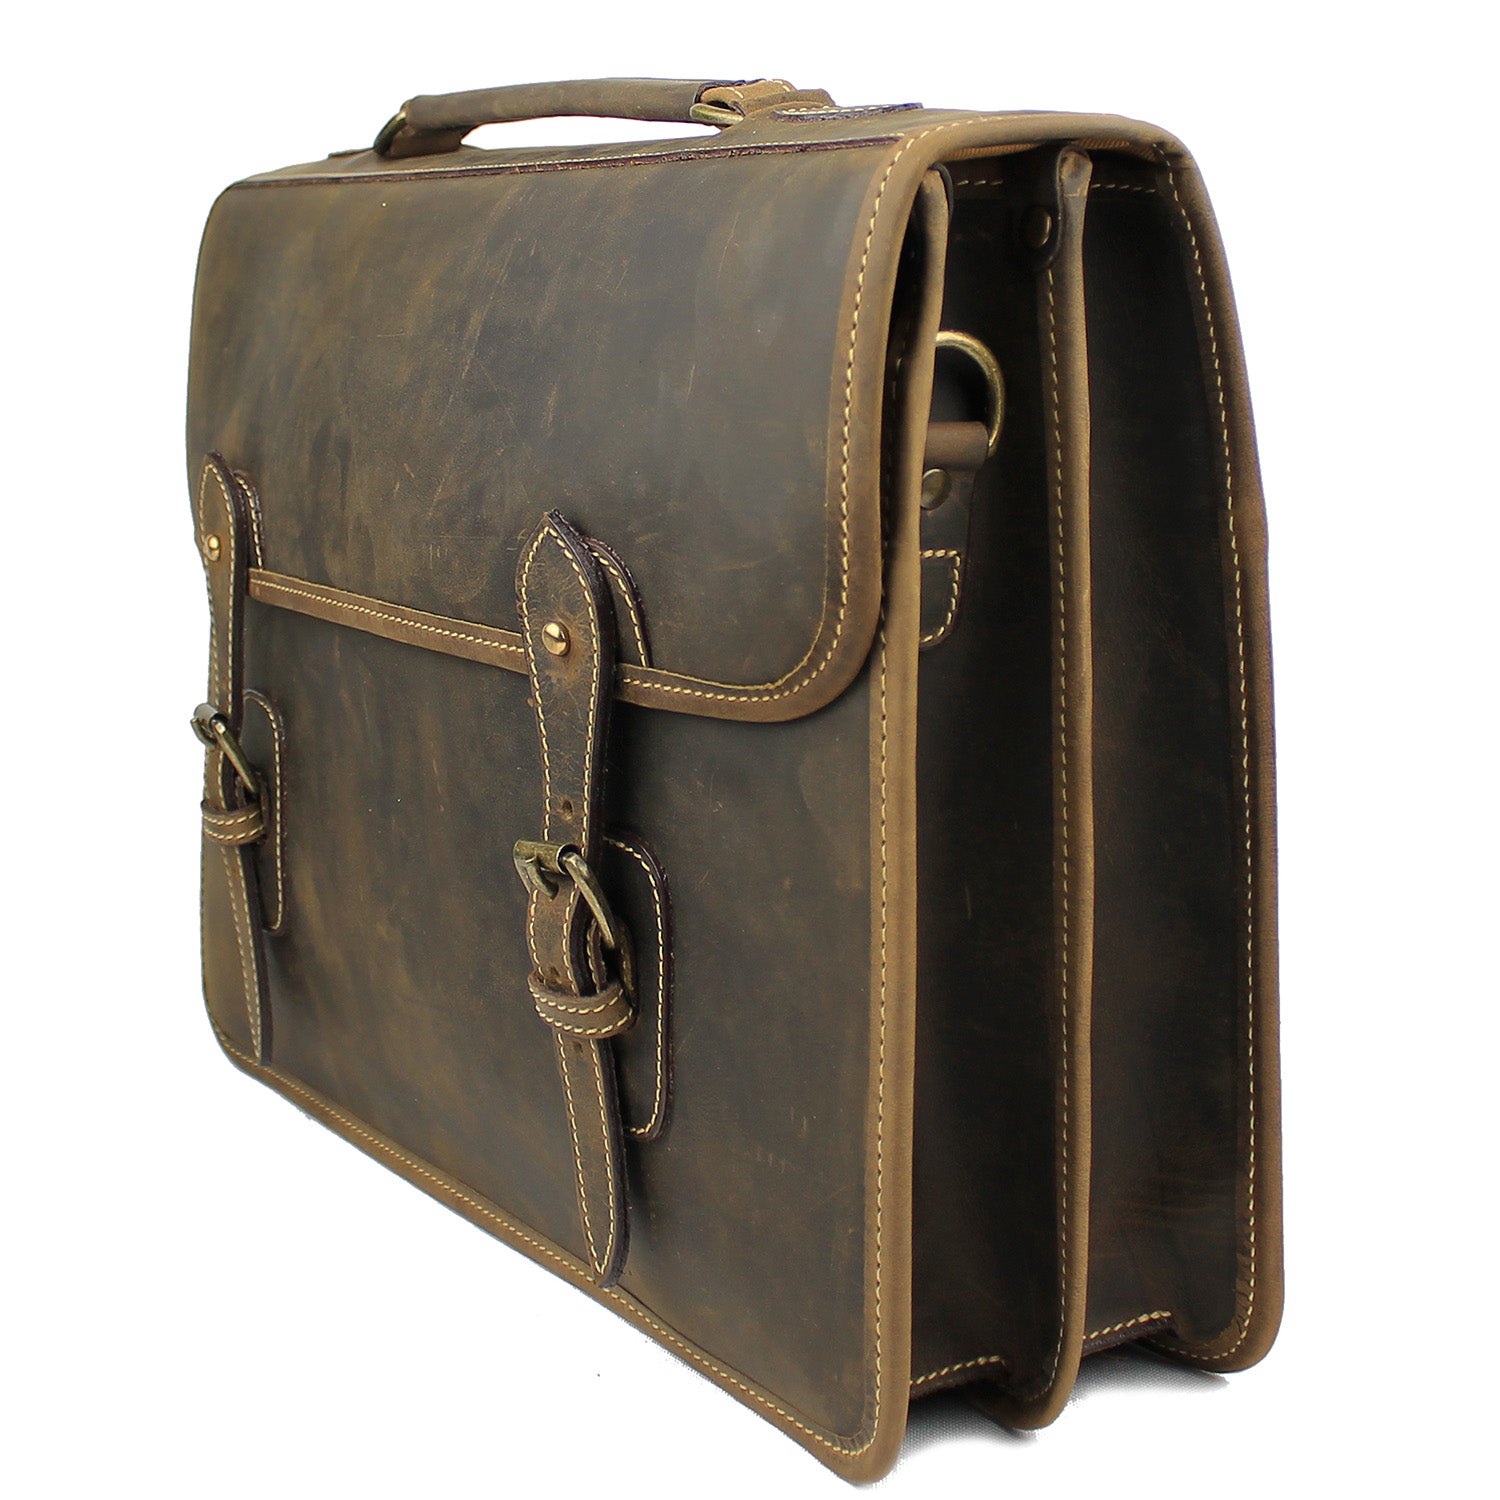 Tusting Briefcase - Wymington - Aztec Crazyhorse Leather